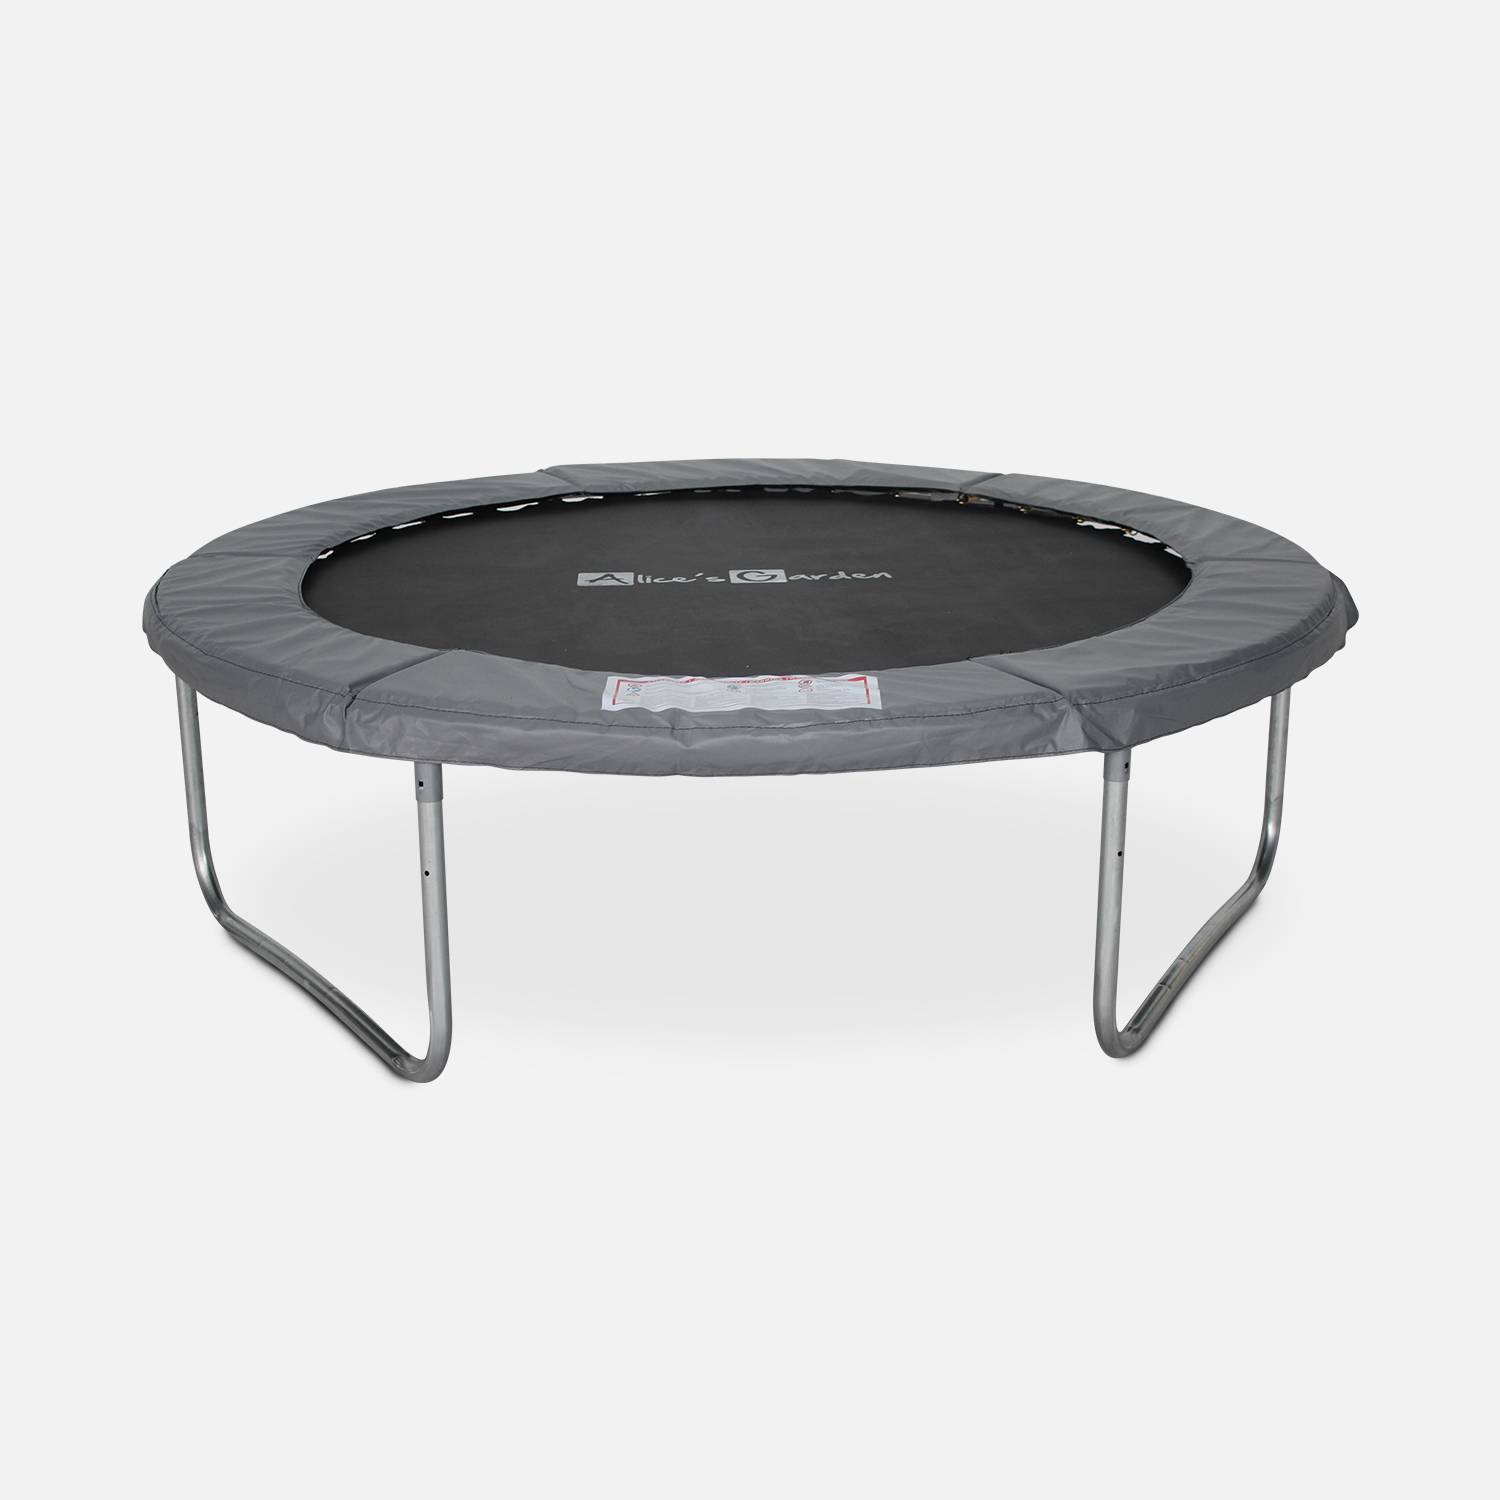 Round trampoline Ø 180cm grey with its protective net - Cassiopée - Garden trampoline 2m| PRO quality | EU standards. Photo2